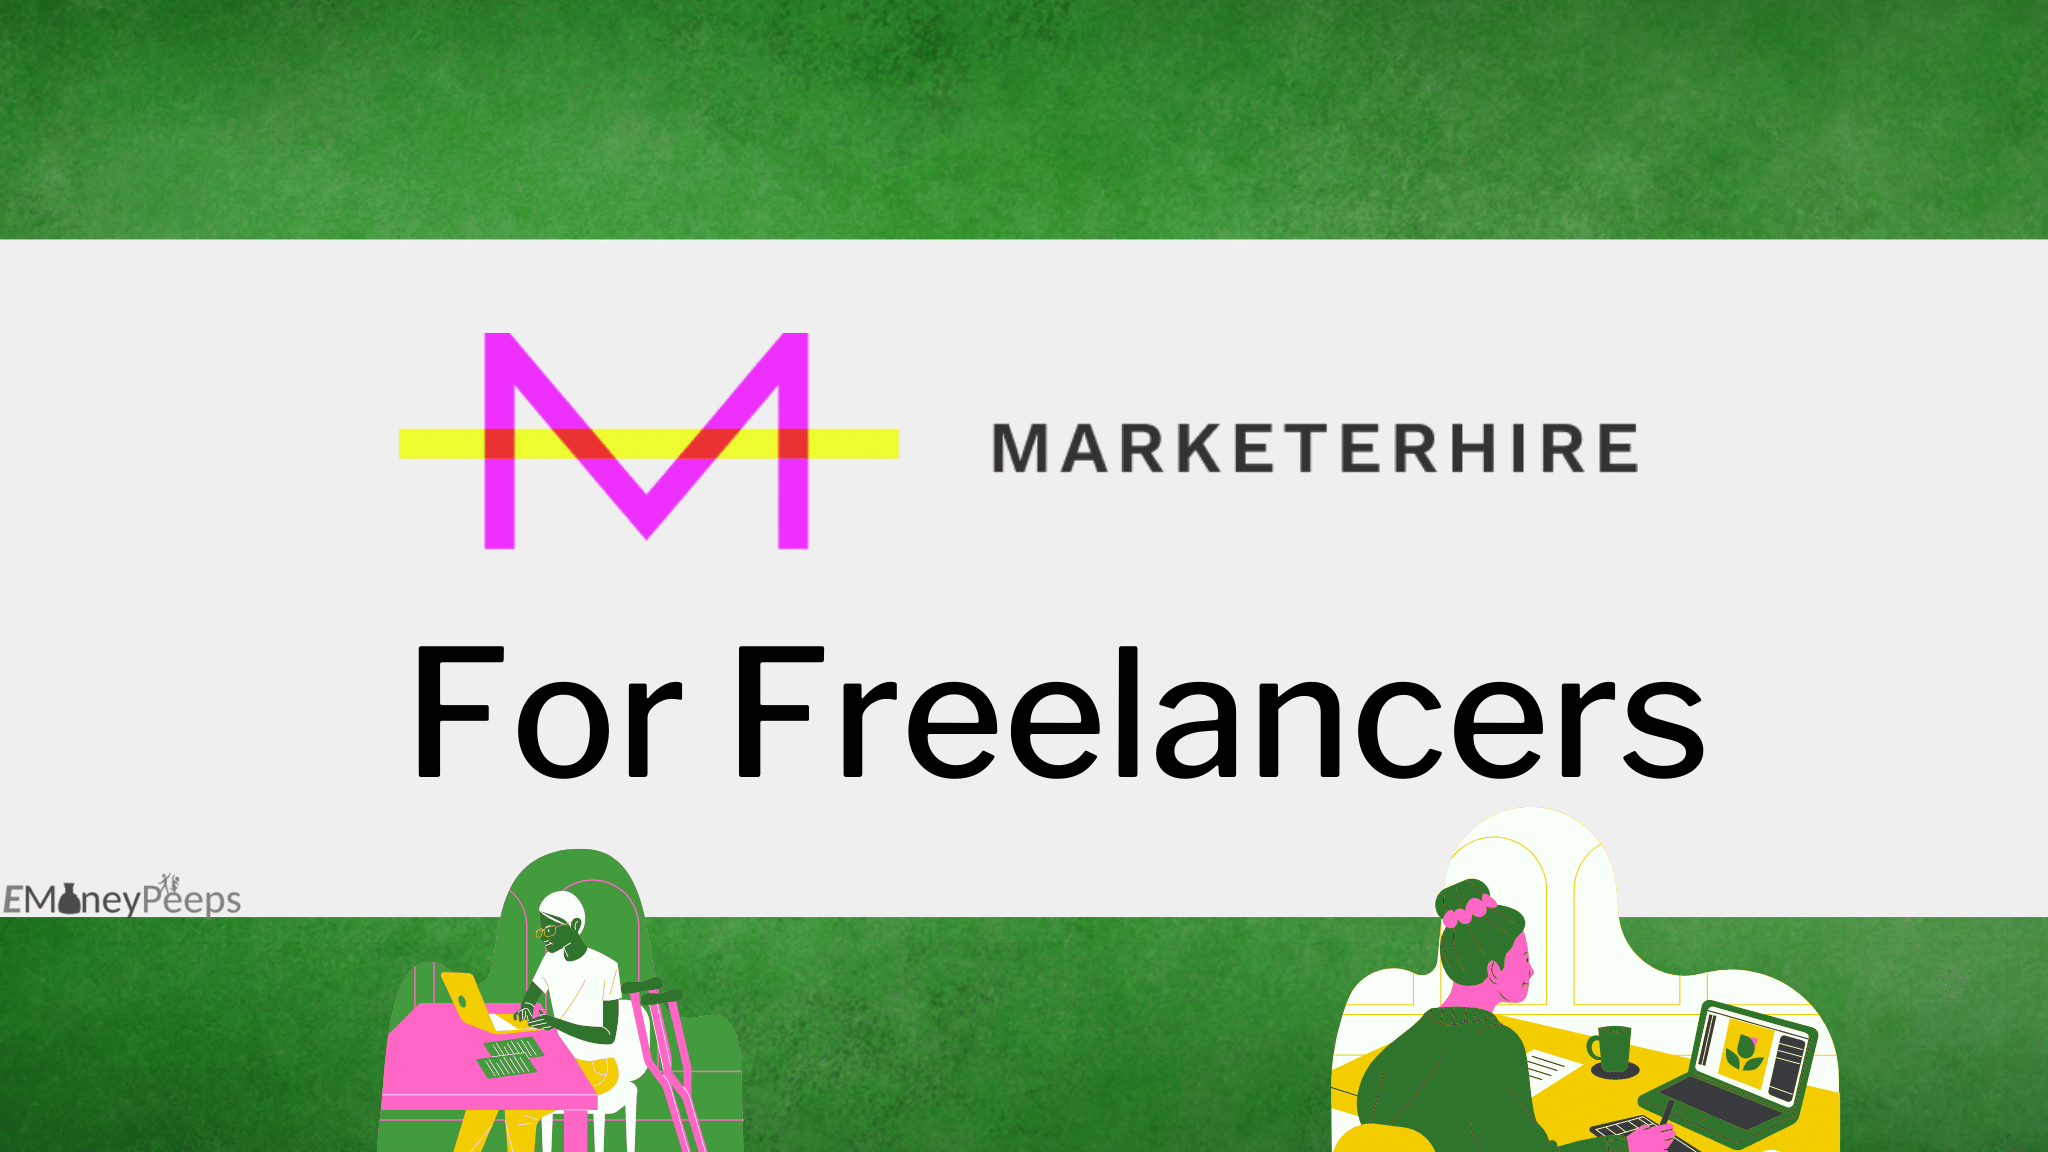 MarketerHire For Freelancers